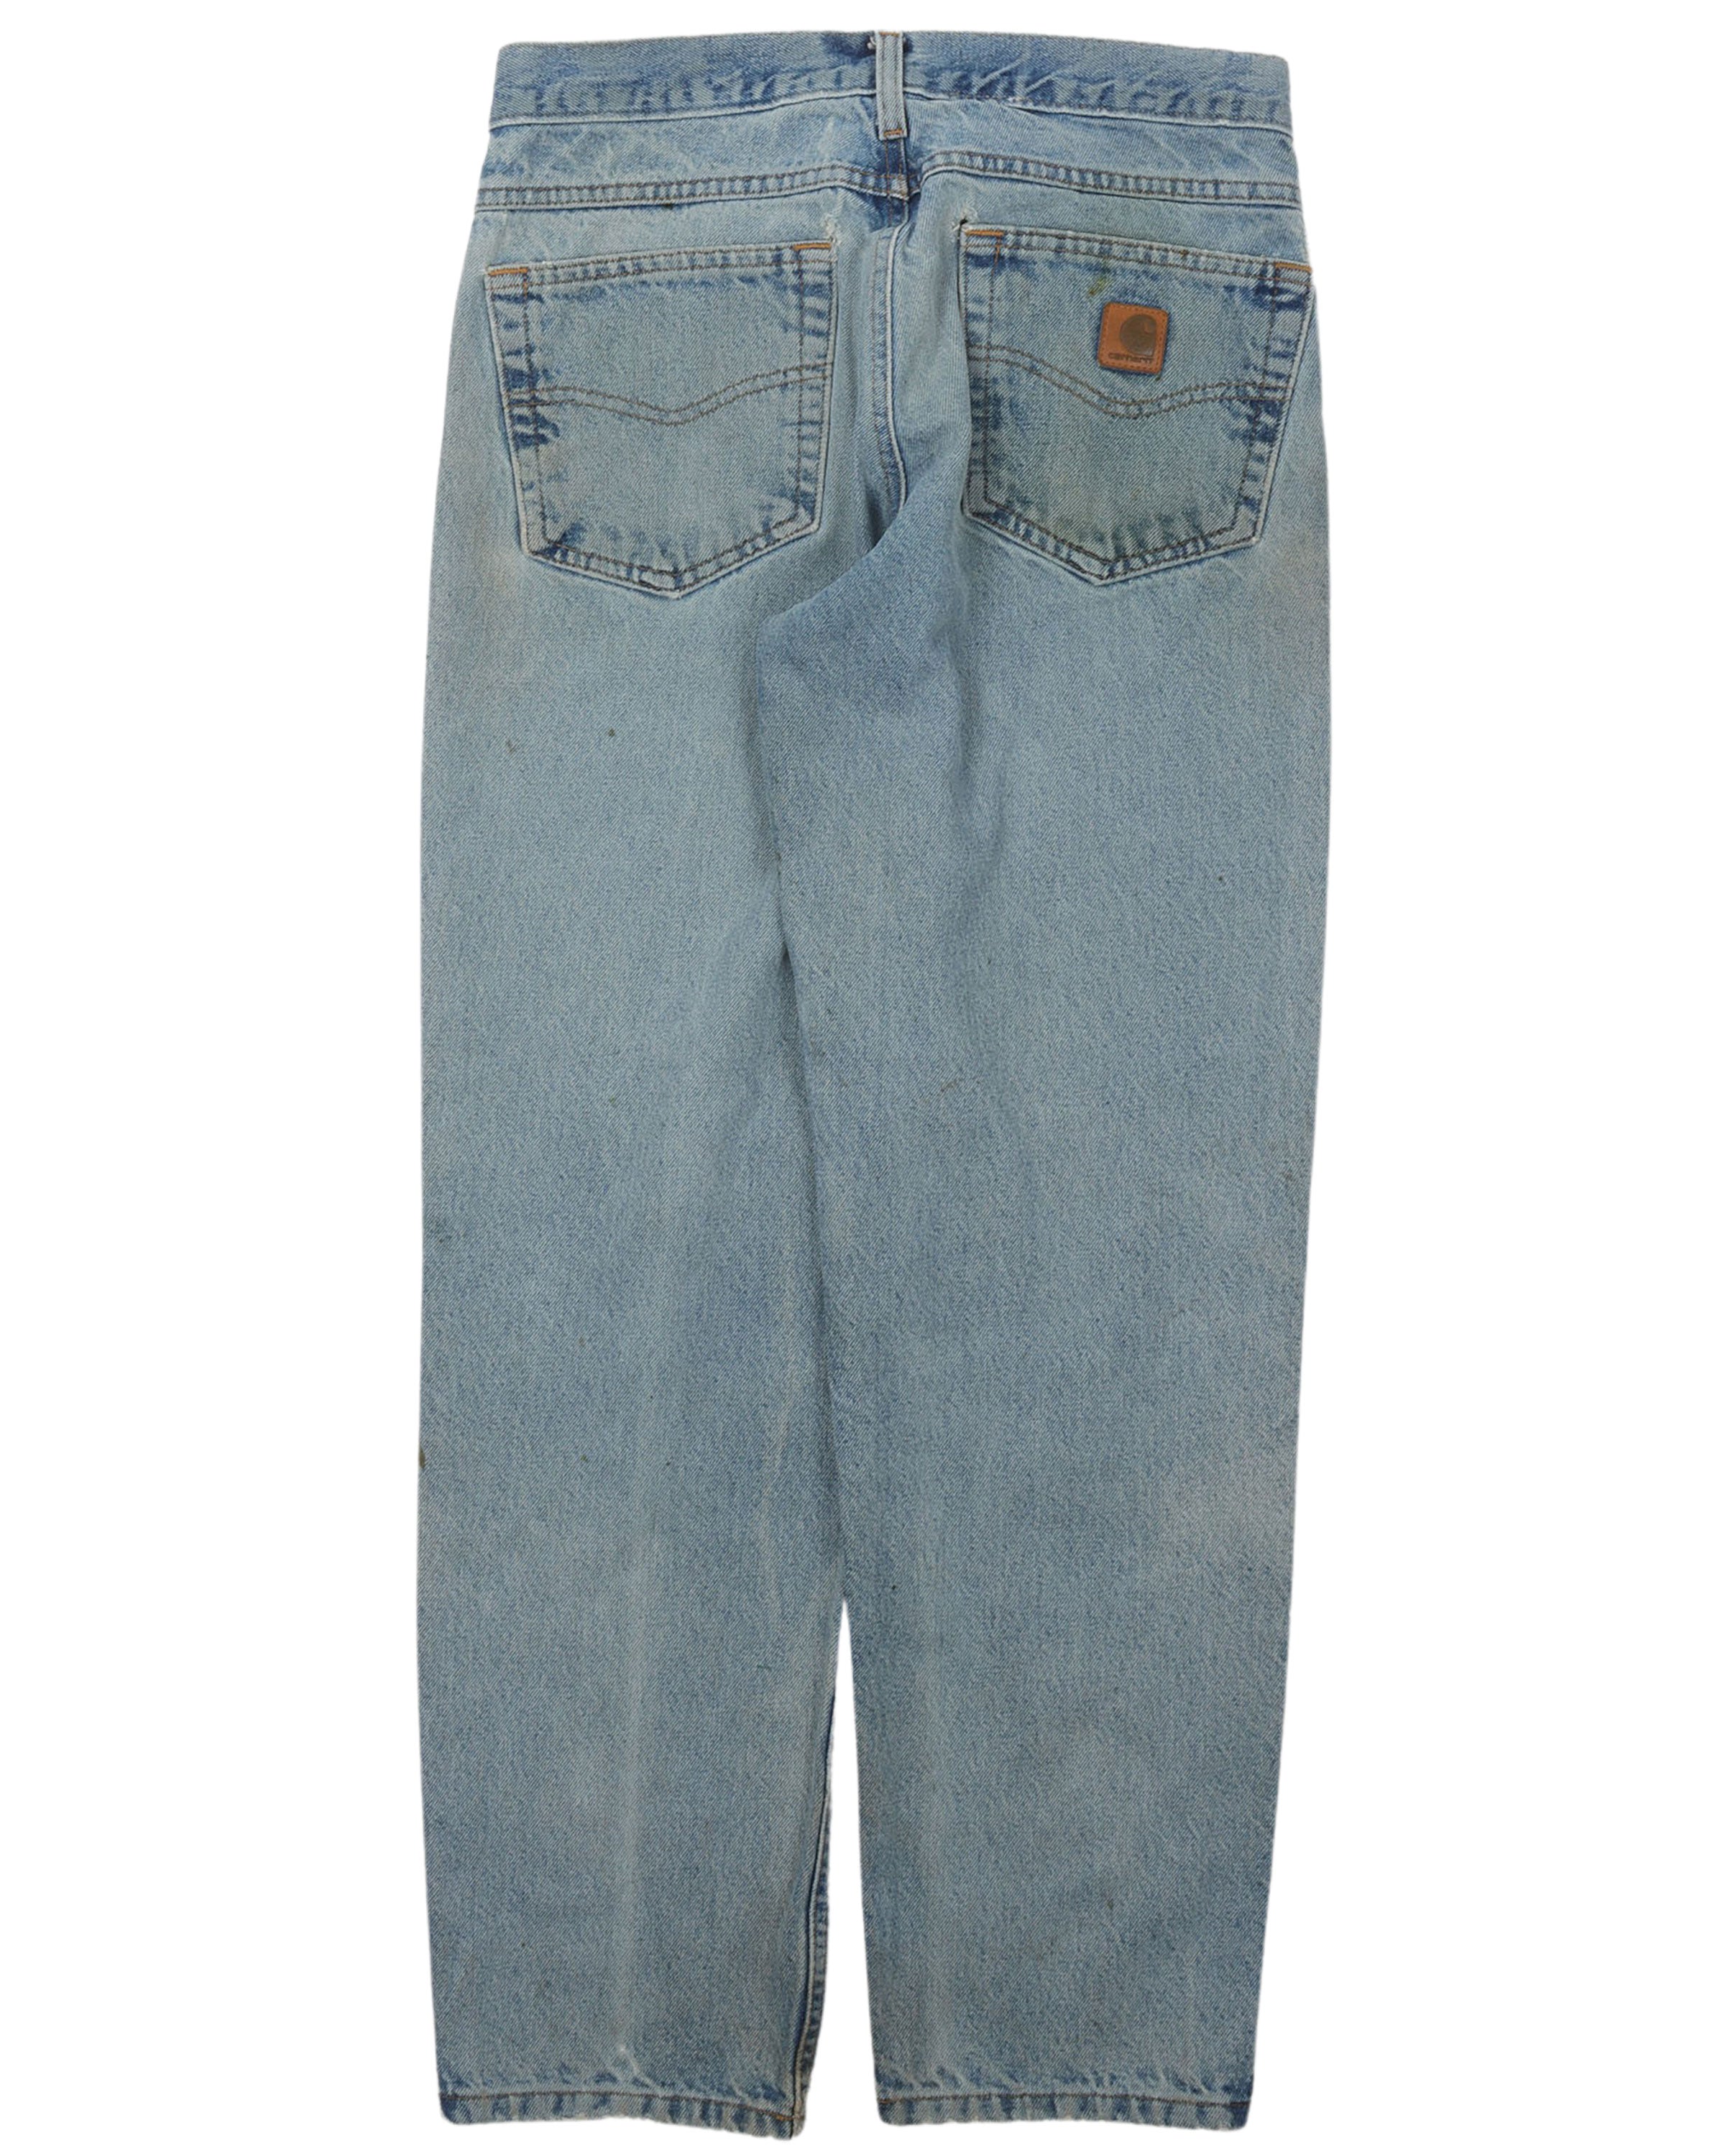 Carhartt Distressed Jeans